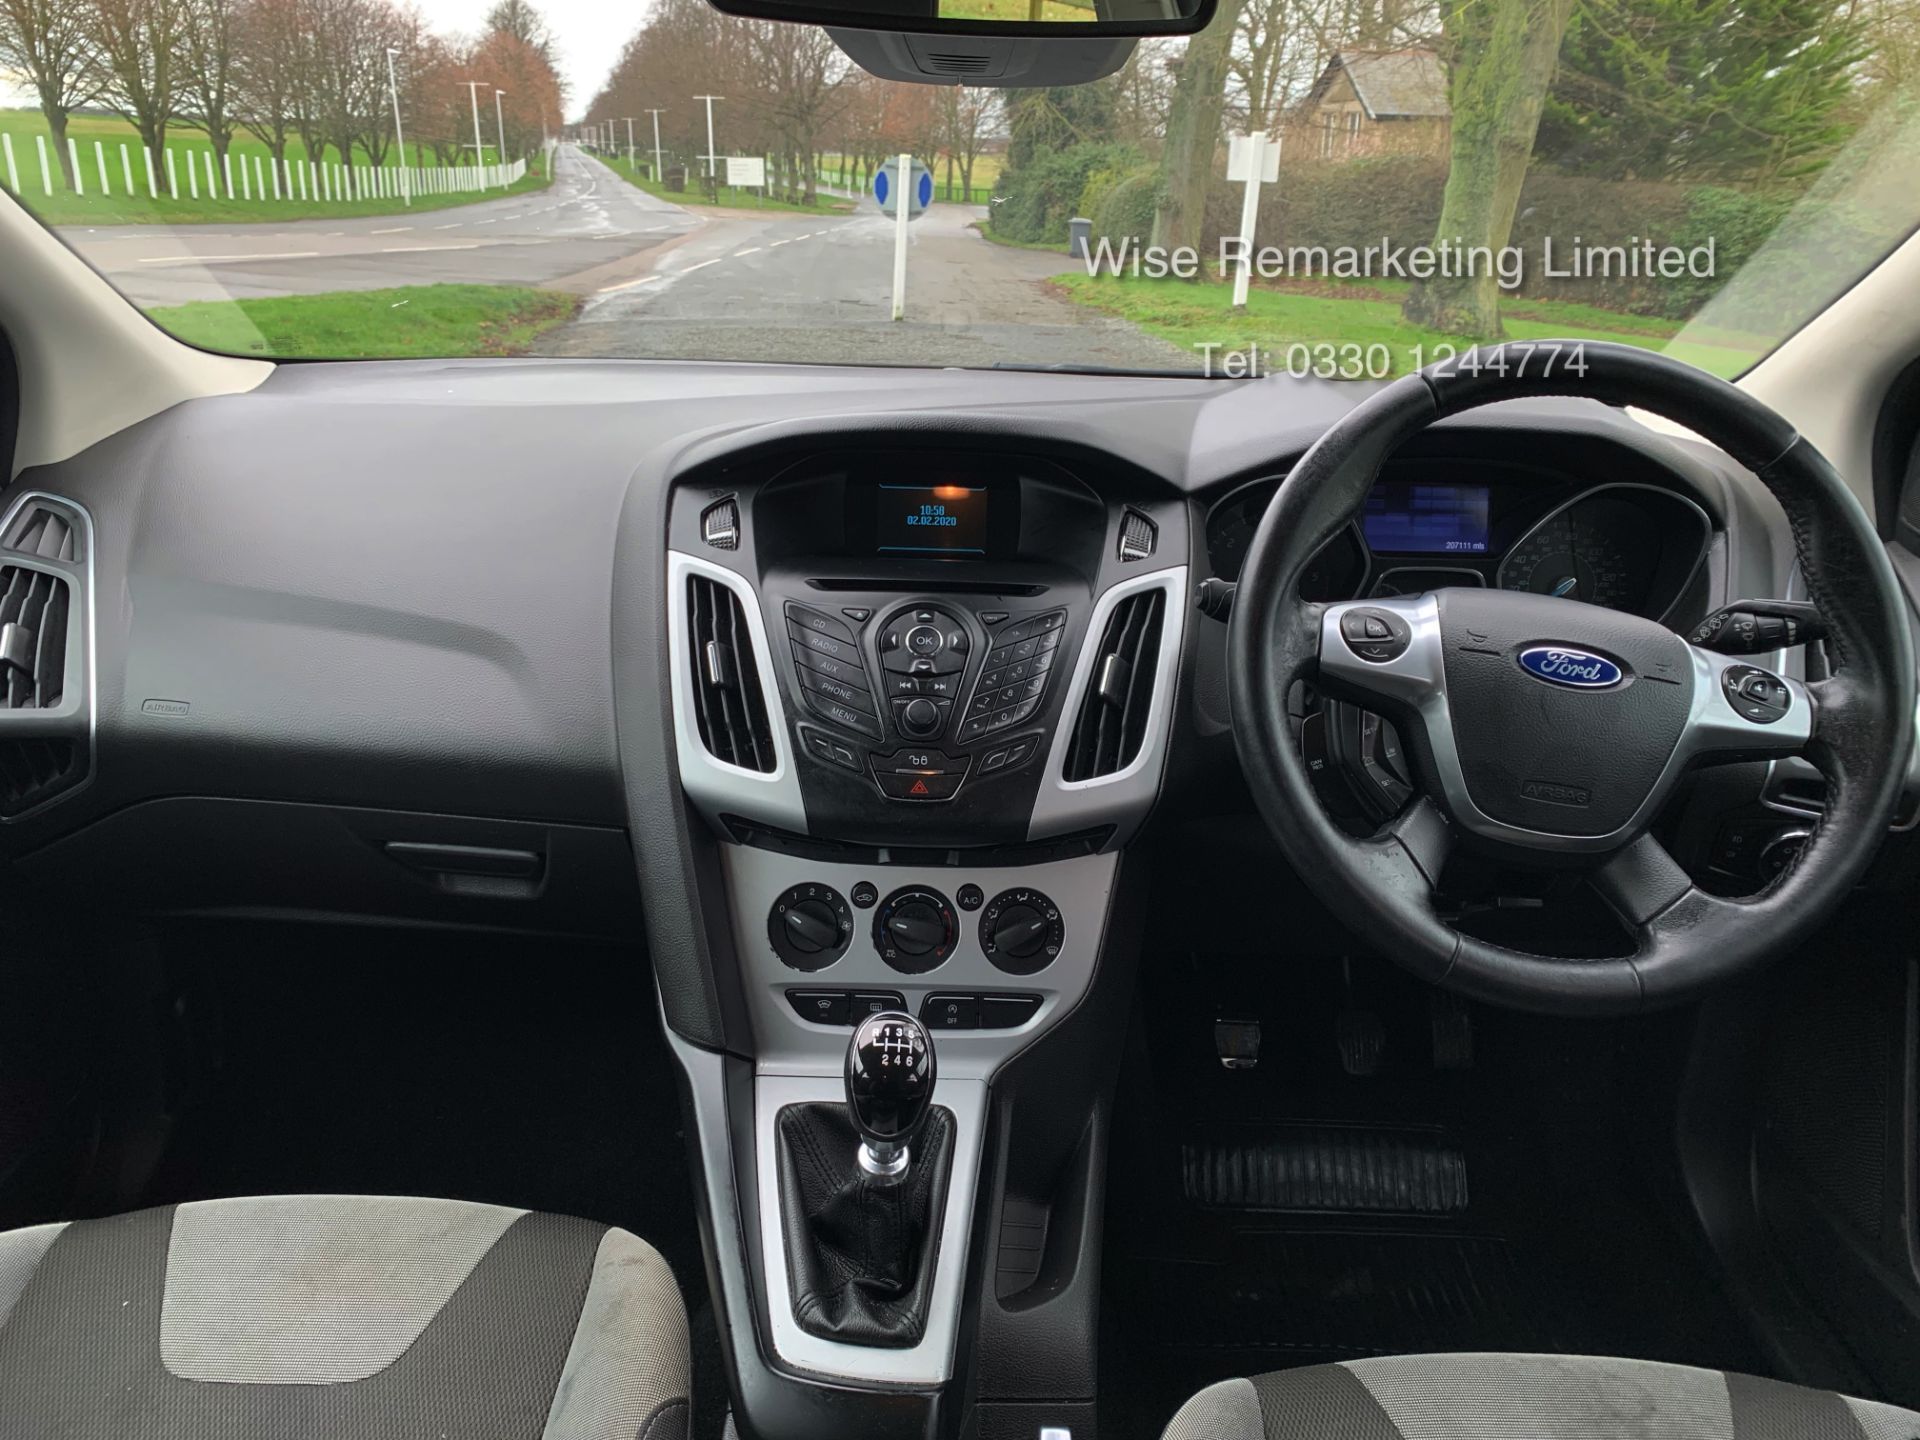 Ford Focus Zetec 1.6 TDCI Econetic - 2015 Model - 6 Speed - - Image 19 of 20